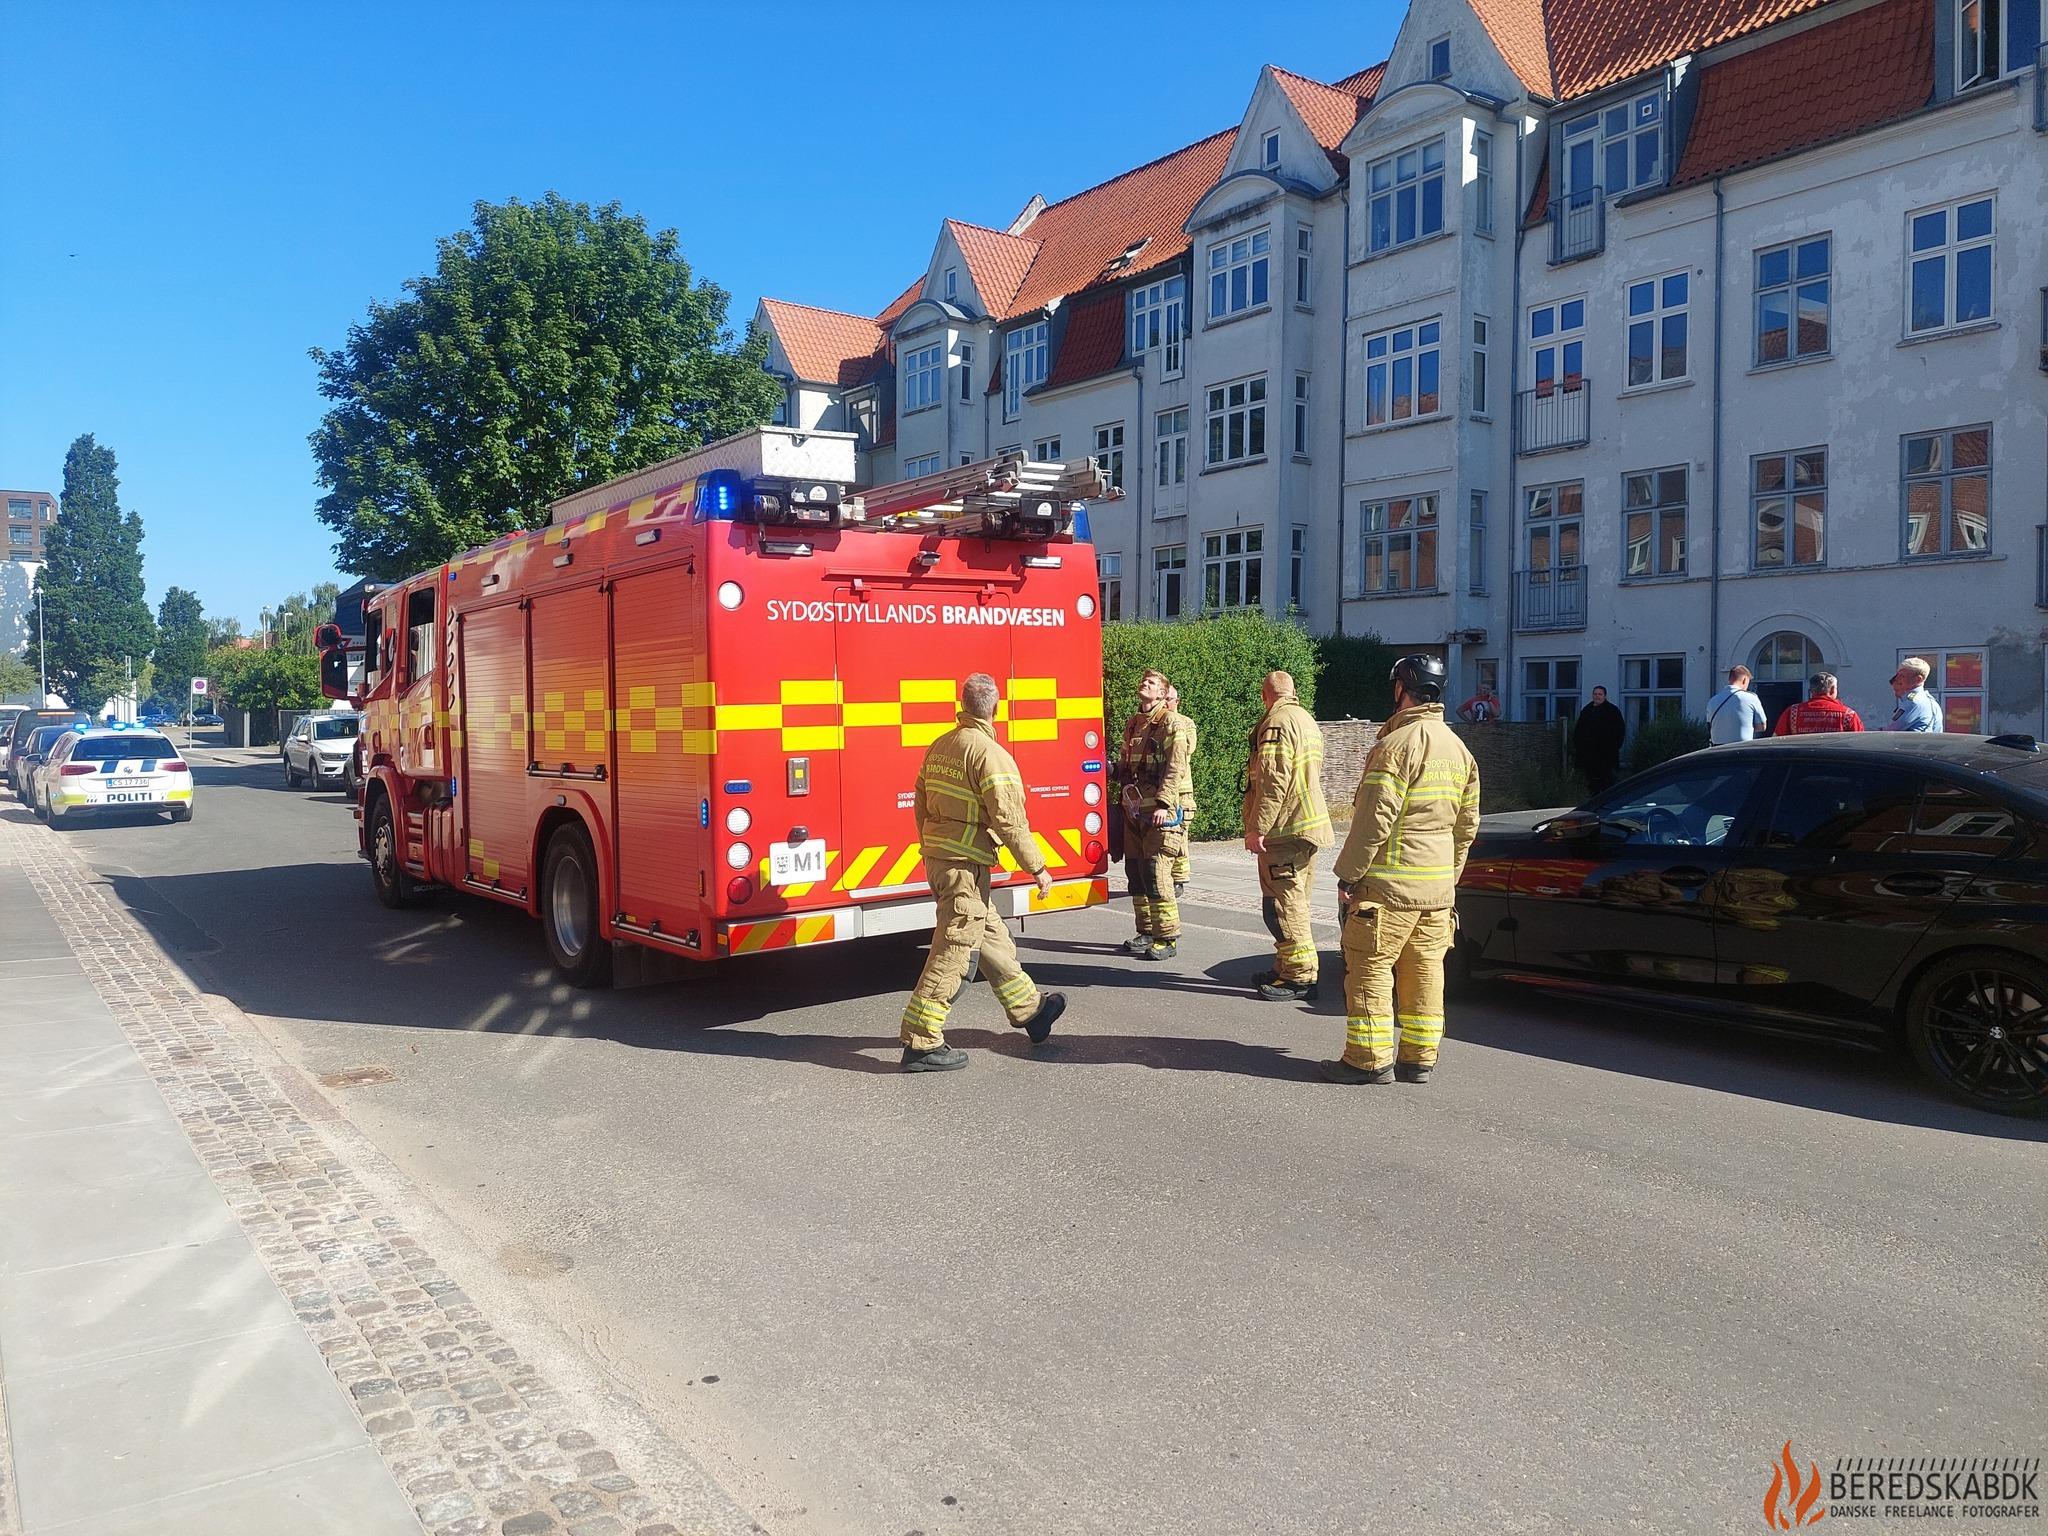 08/06-23 Brand på Jyllandsgade i Horsens